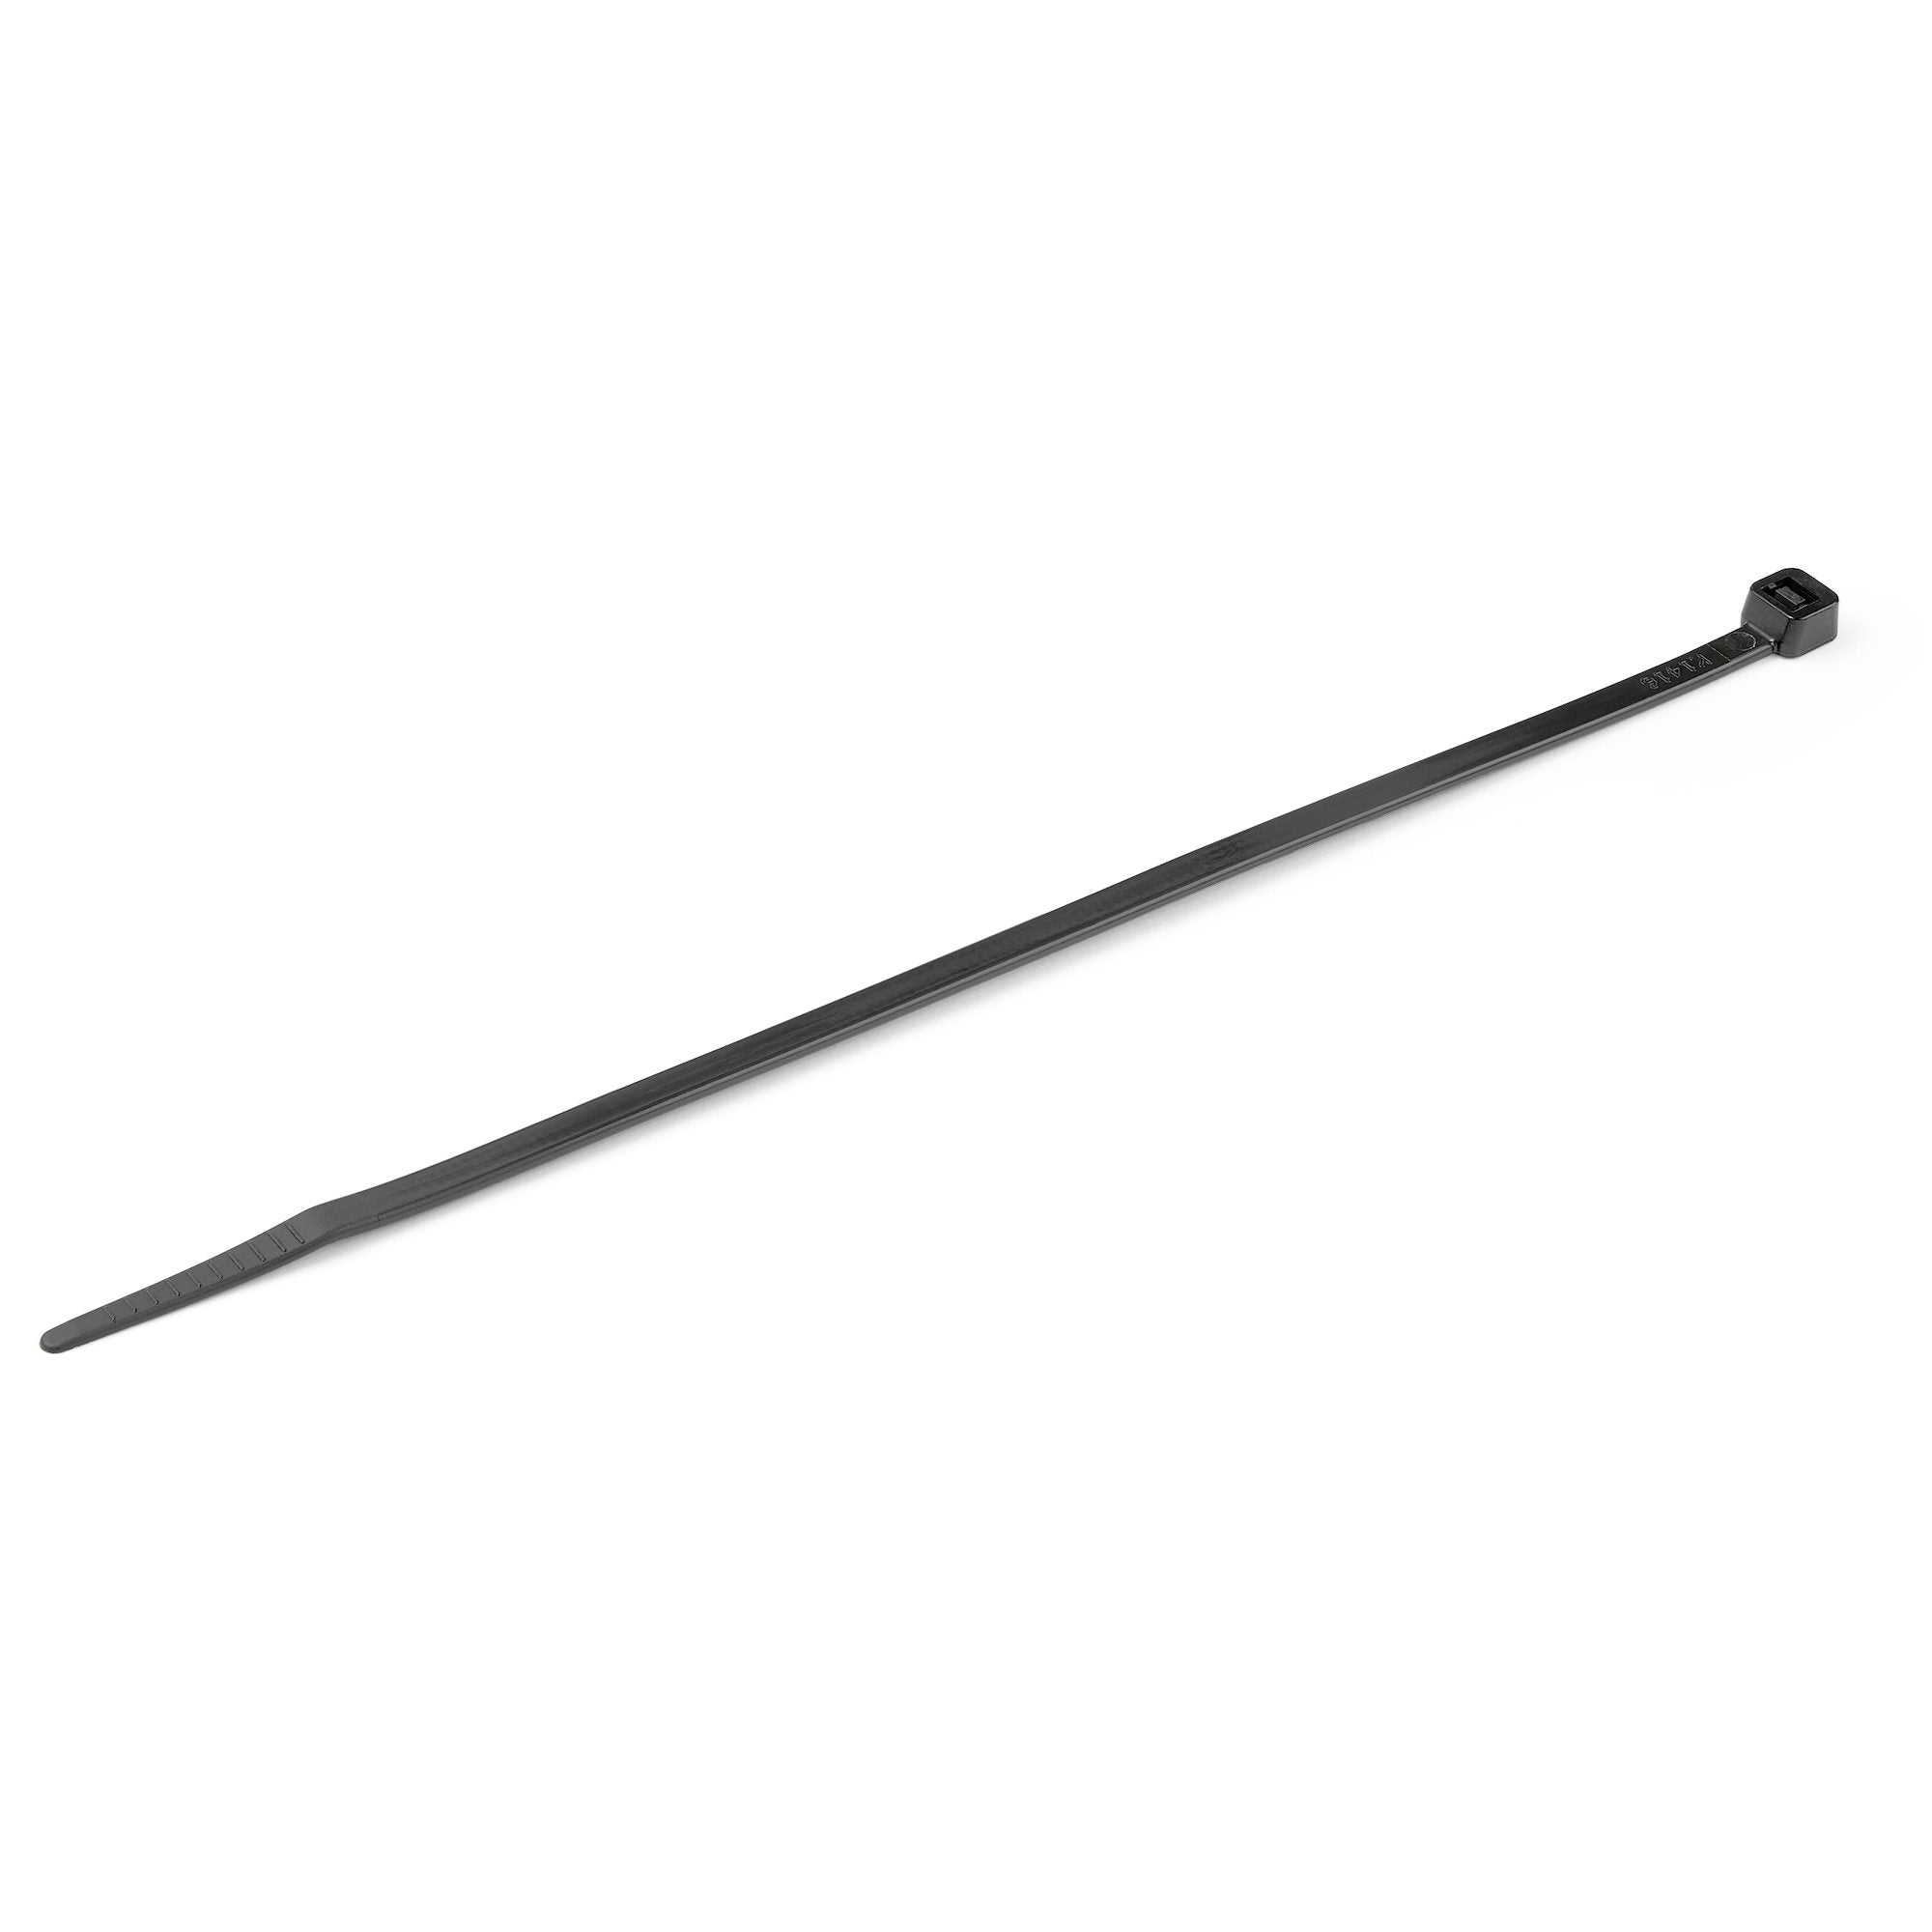 StarTech.com 8"(20cm) Cable Ties - 1/8"(4mm) wide, 2-1/8"(55mm) Bundle Diameter, 50lb(22kg) Tensile Strength, Nylon Self Locking Zip Ties w/ Curved Tip - 94V-2/UL Listed, 1000 Pack - Black